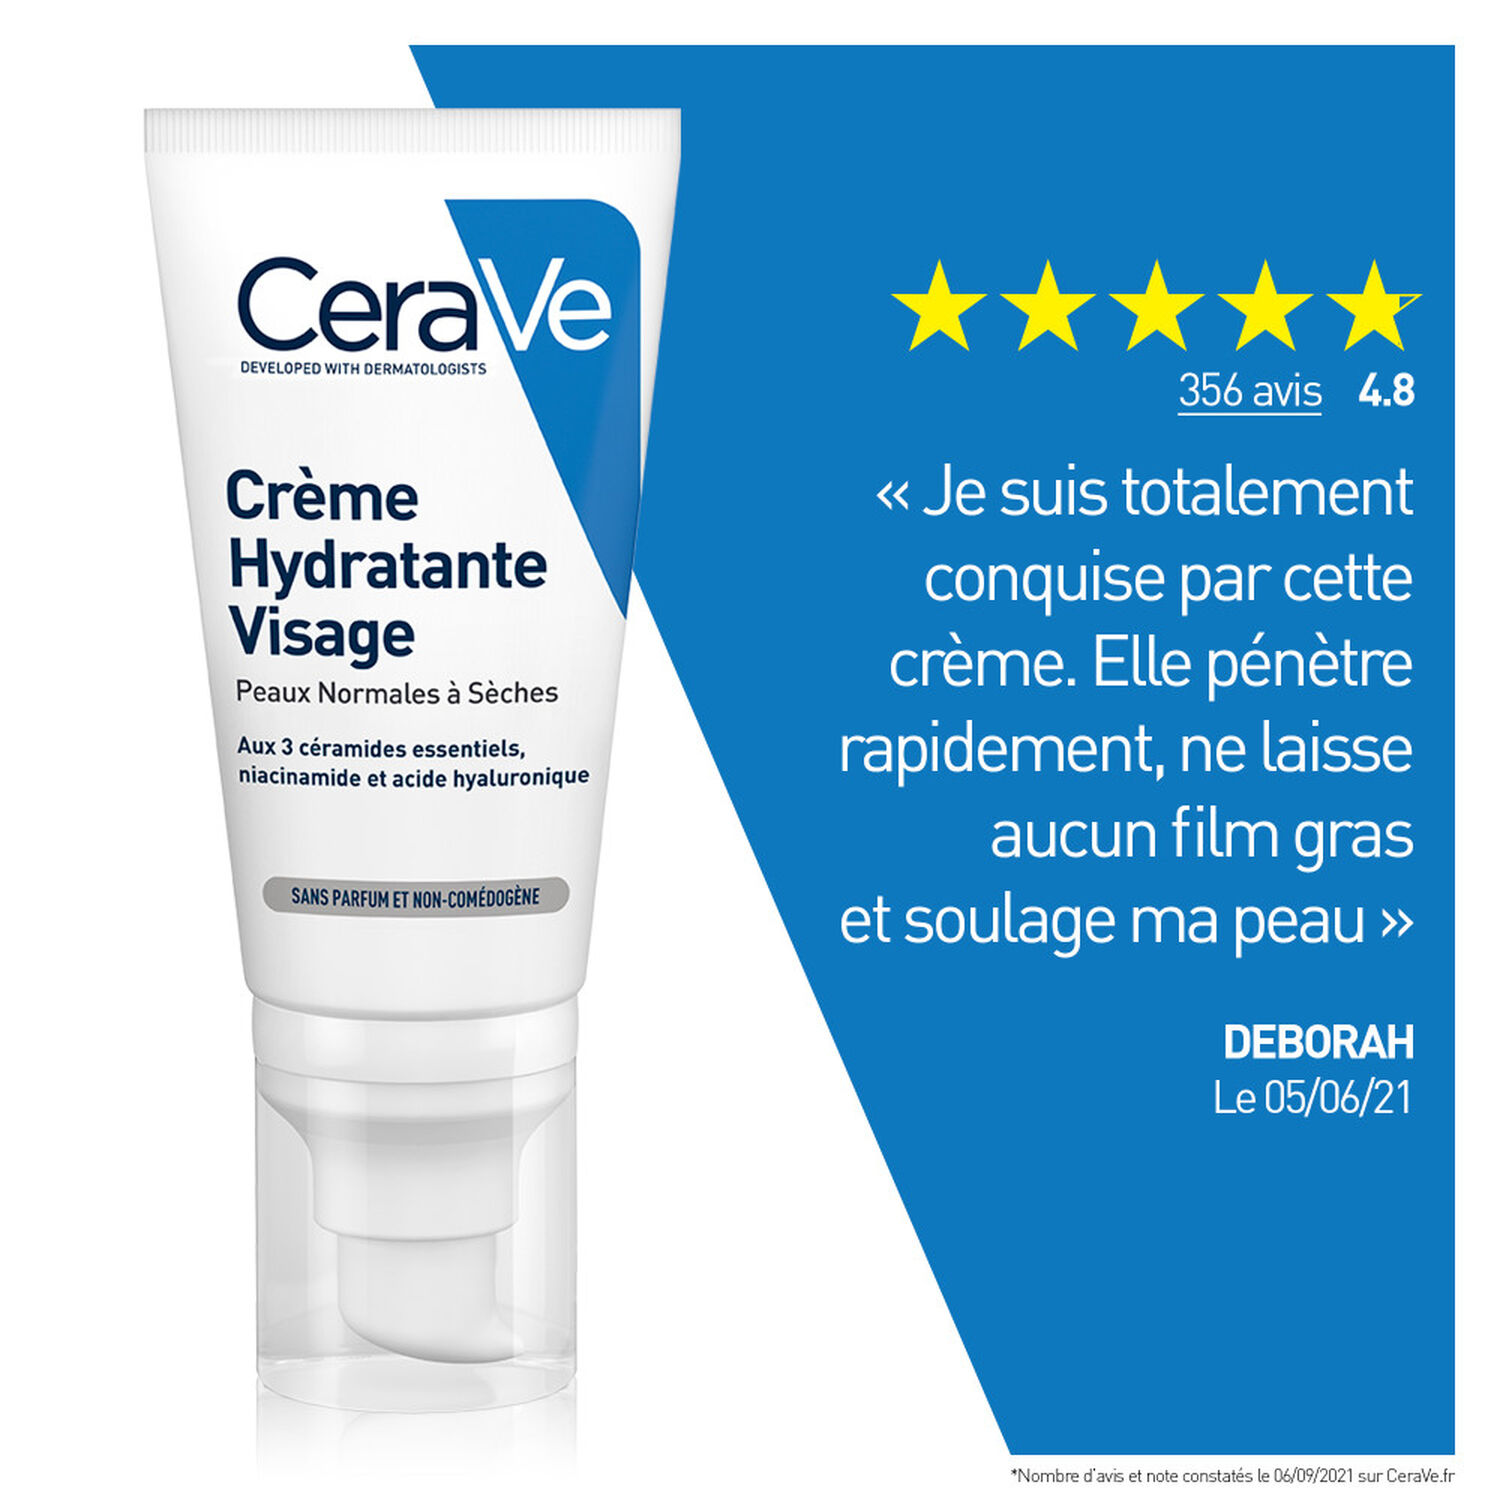 Crème Hydratante Visage Cerave Moisturising and nourishing care 52ml